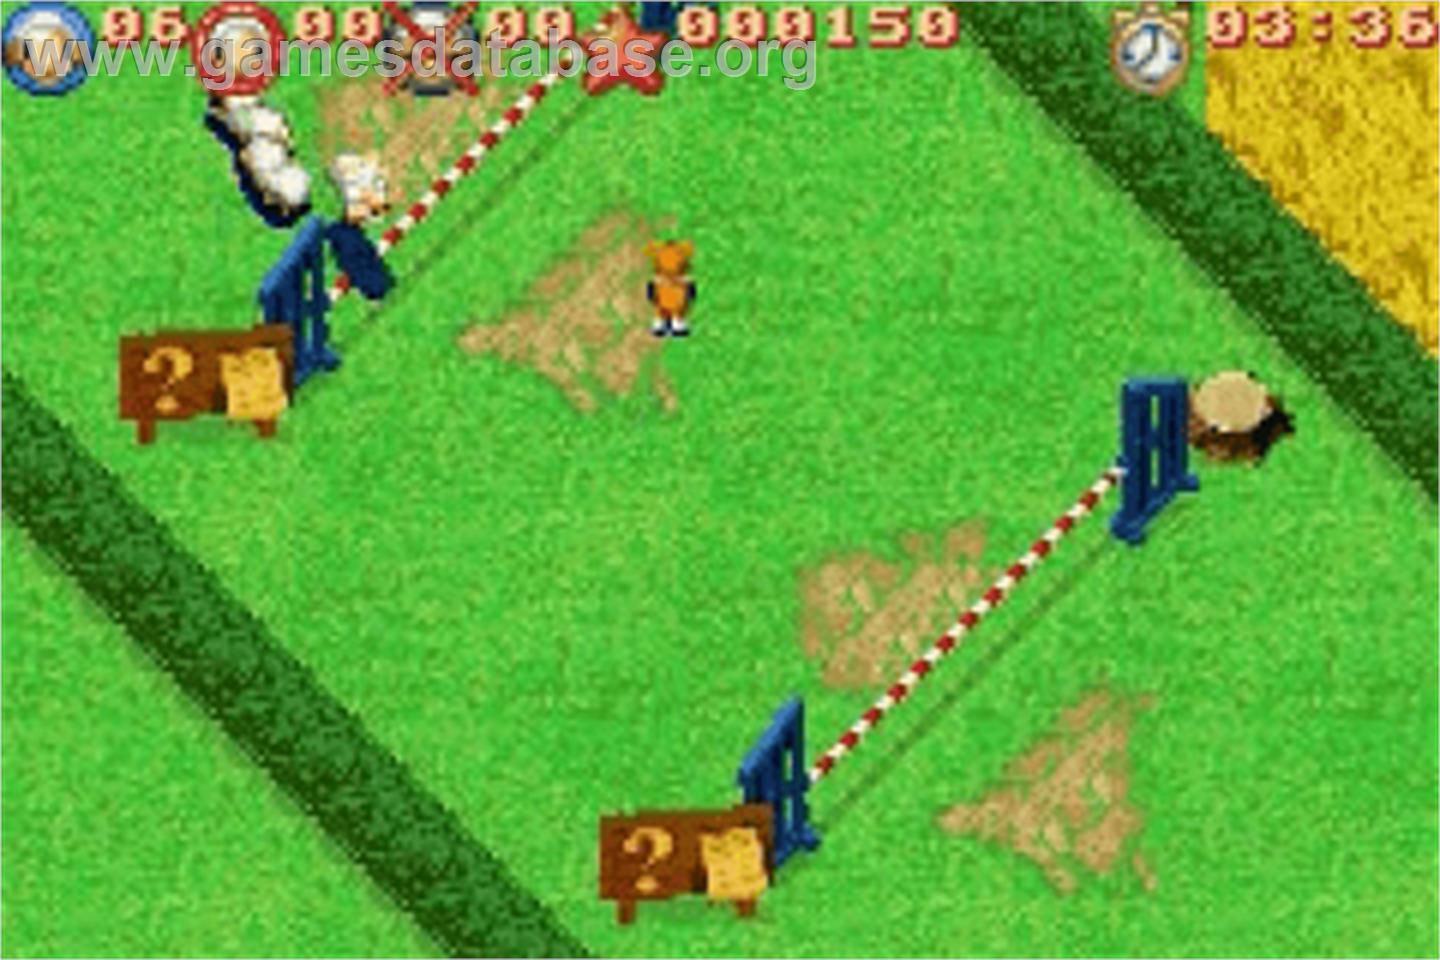 Sheep - Nintendo Game Boy Advance - Artwork - In Game